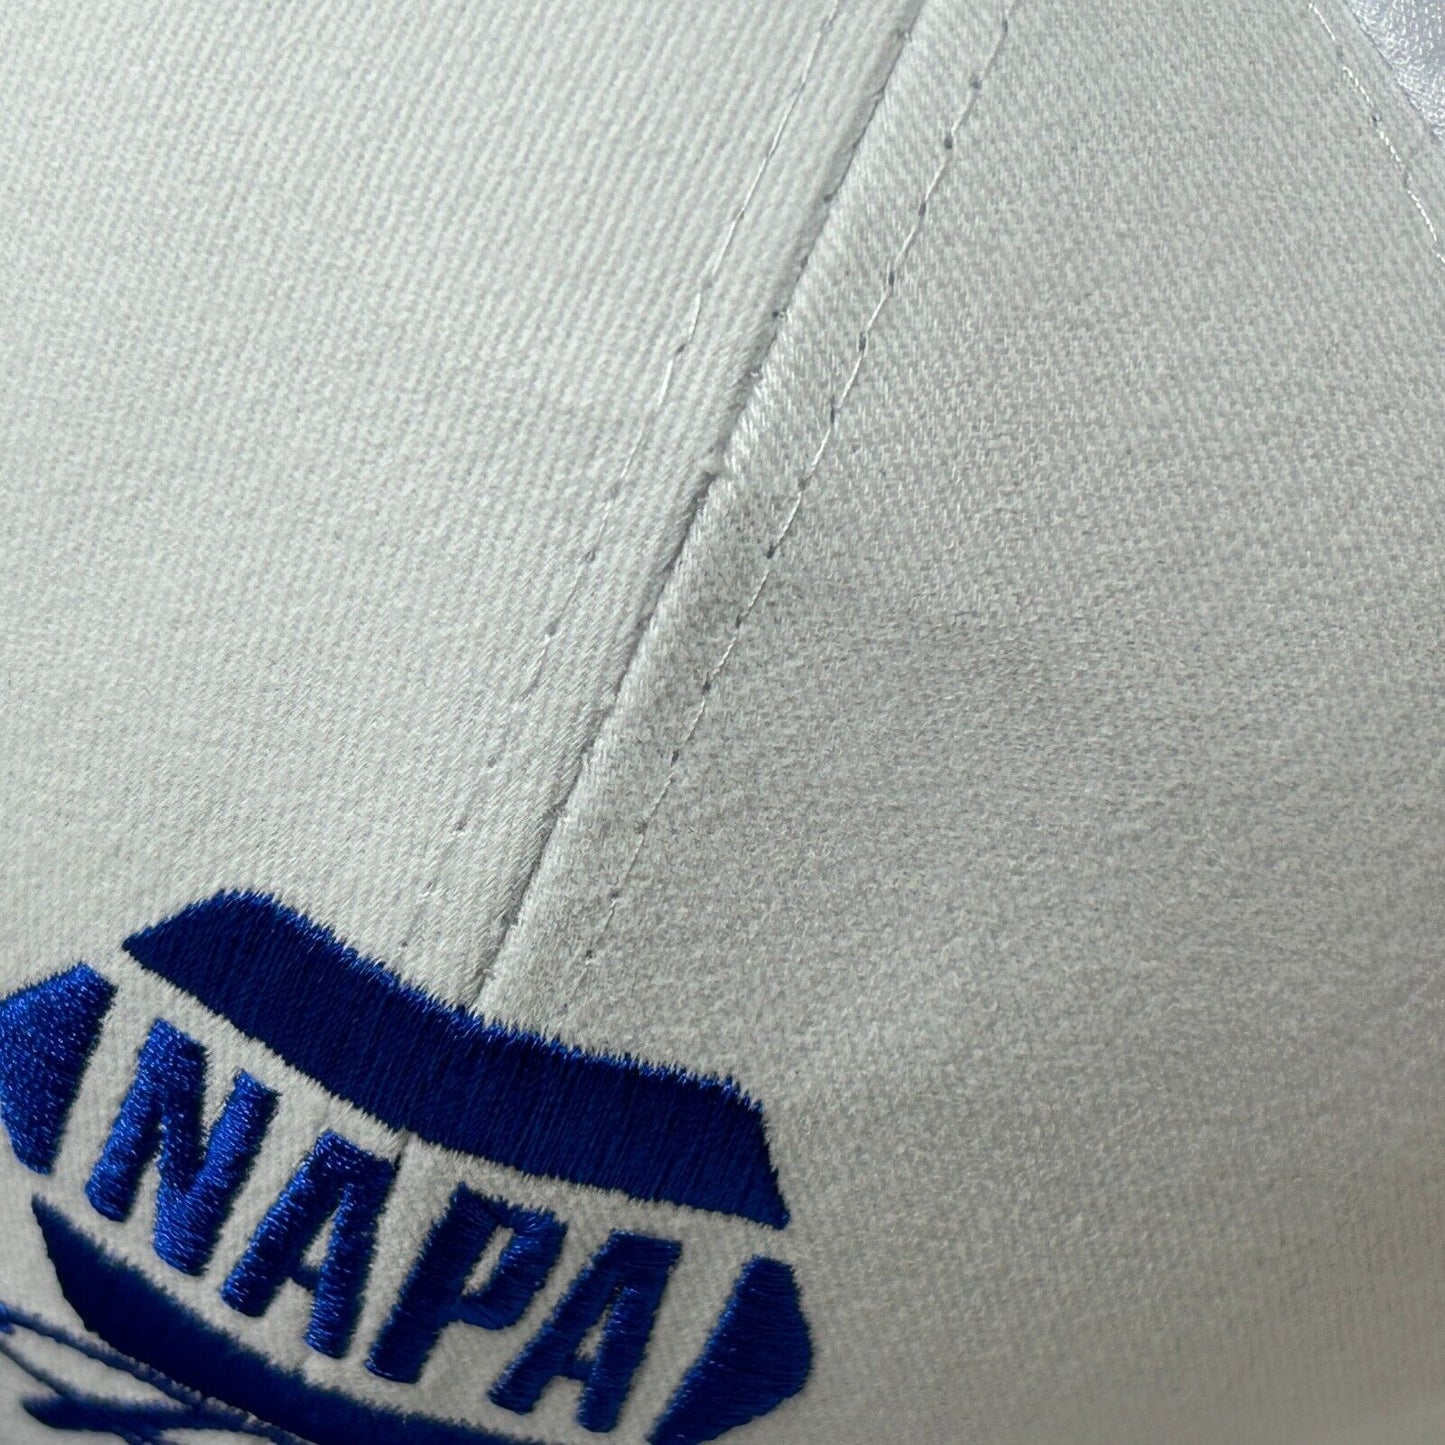 NAPA Racing Chase Elliott Strapback Hat White NASCAR Motorsports Baseball Cap